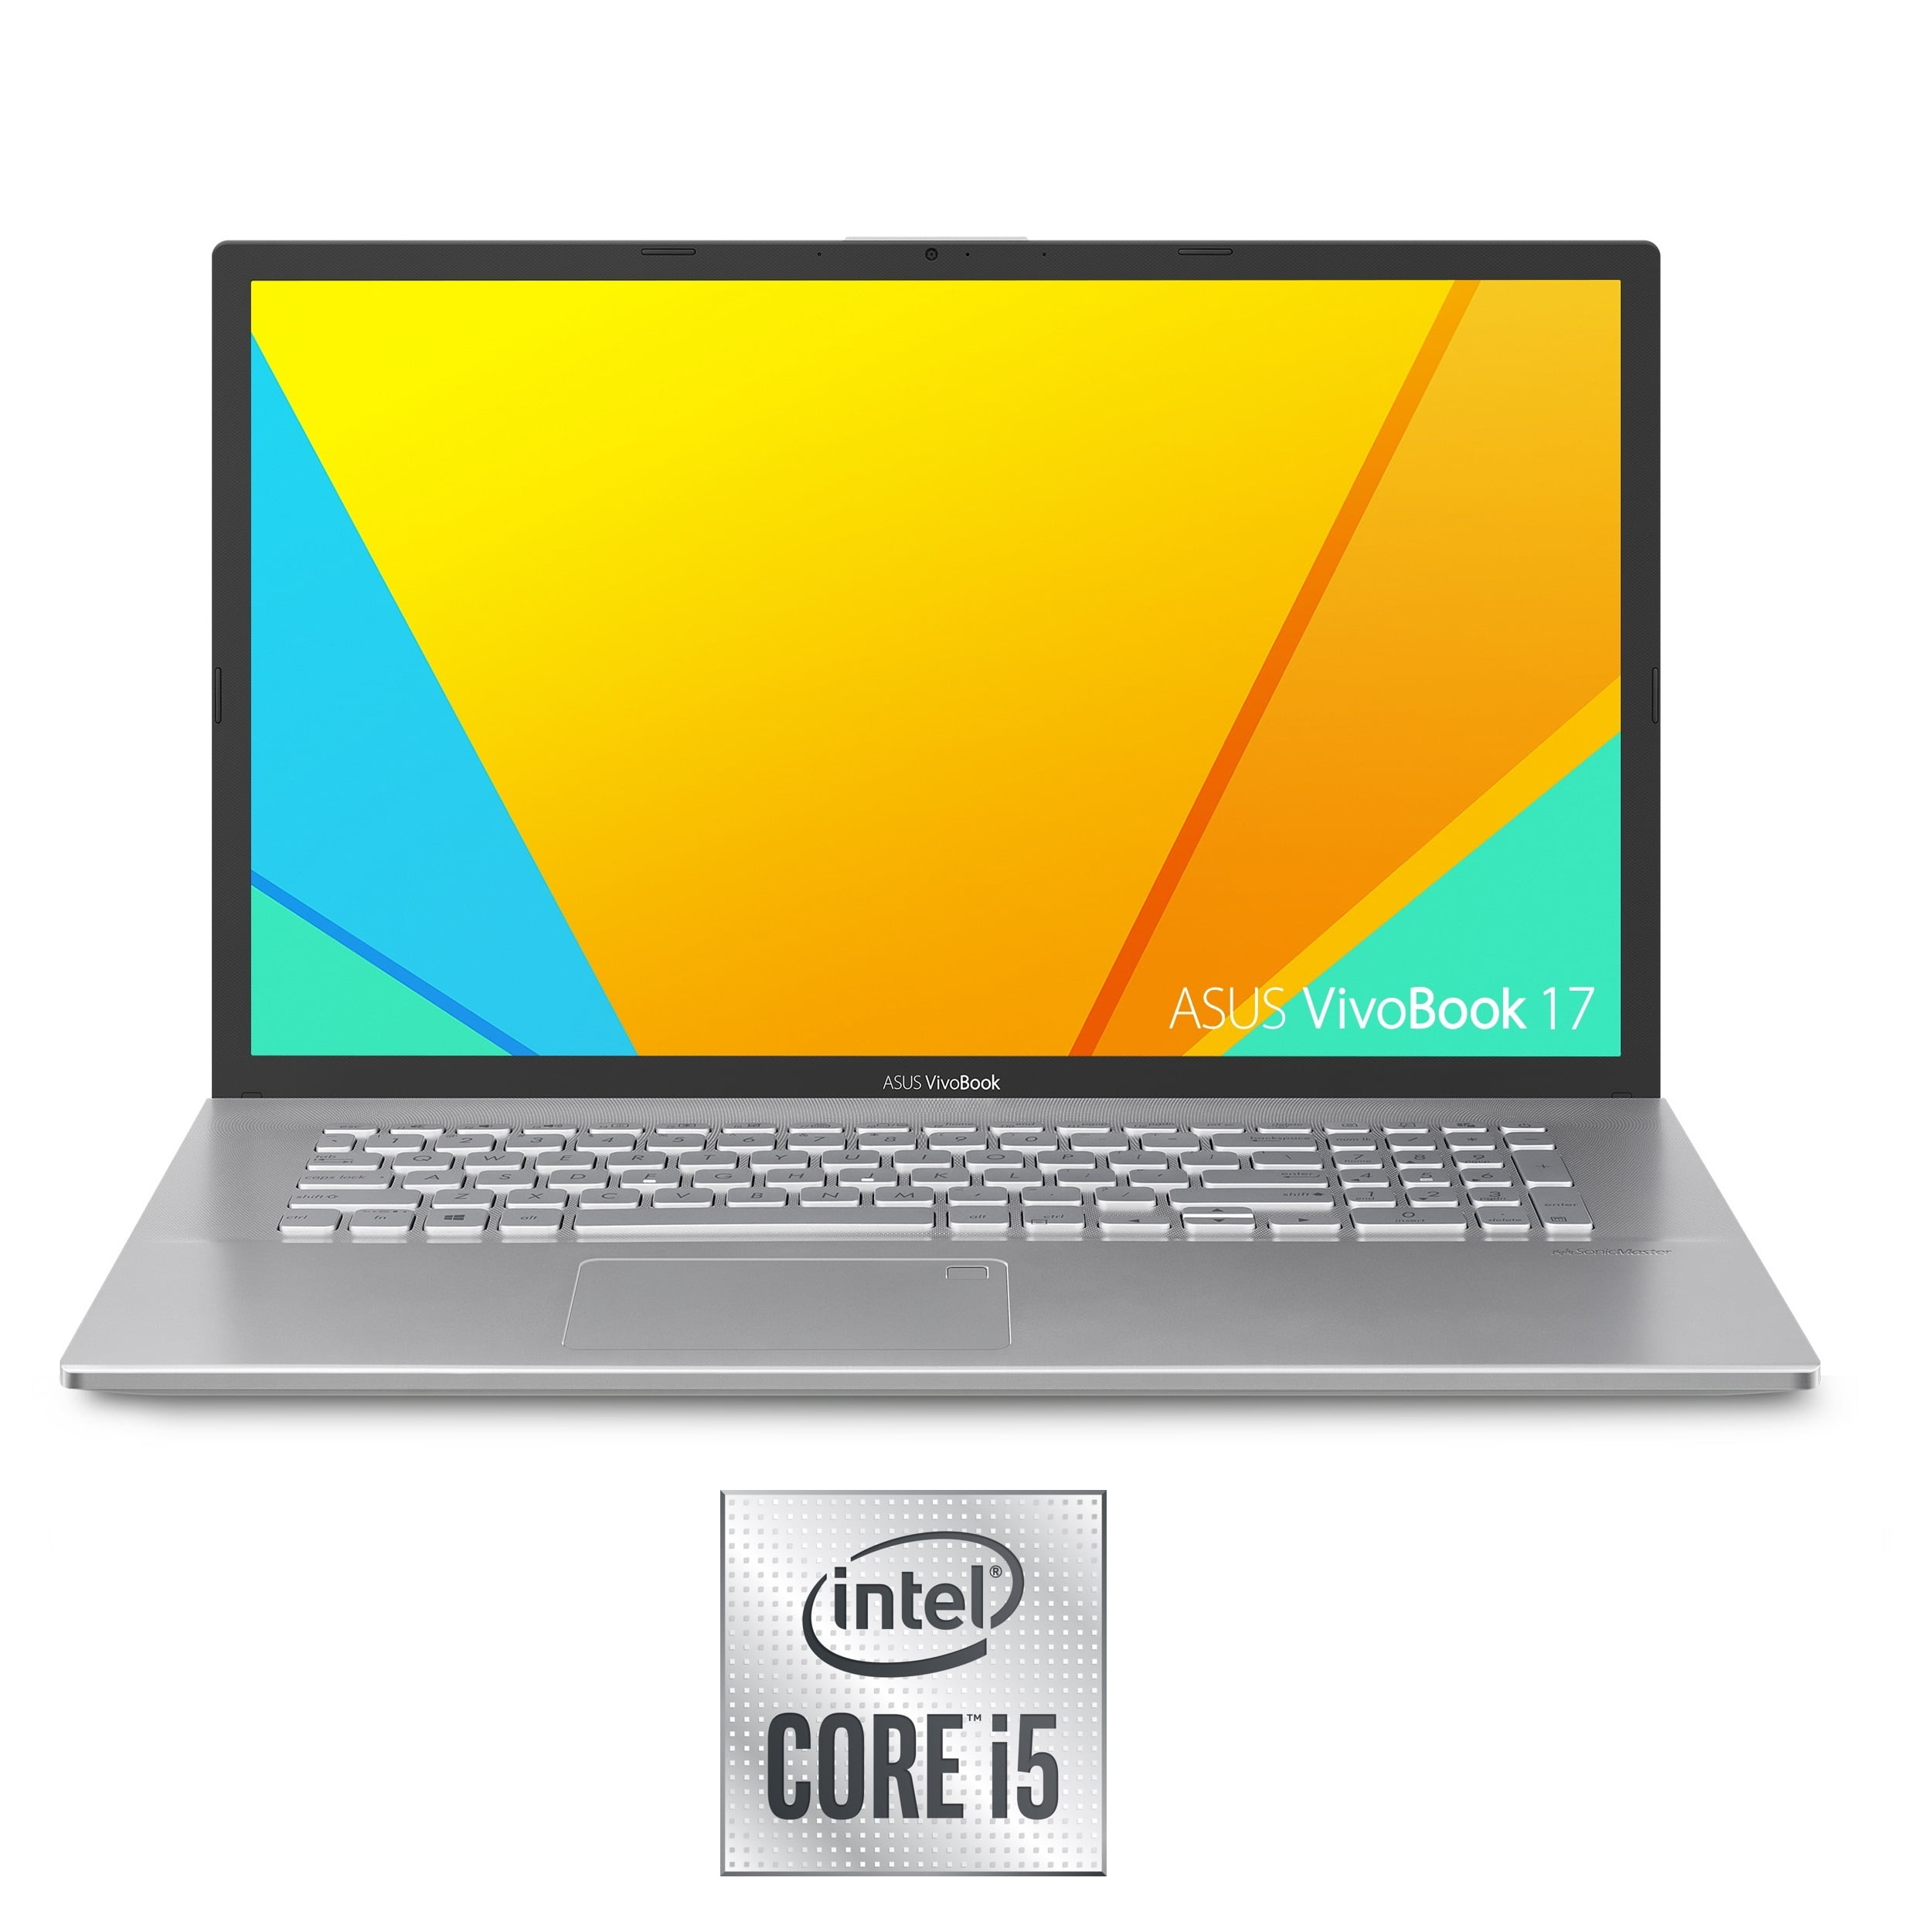 ASUS VivoBook 17.3" 8GB/1TB + 128GB Laptop; 17.3" FHD, Intel Core i5-1035G1, Intel UHD Graphics, 8GB RAM, 128GB SSD + 1TB HDD, Windows 10 Home, Silver, S712JA-WH54 - Walmart.com